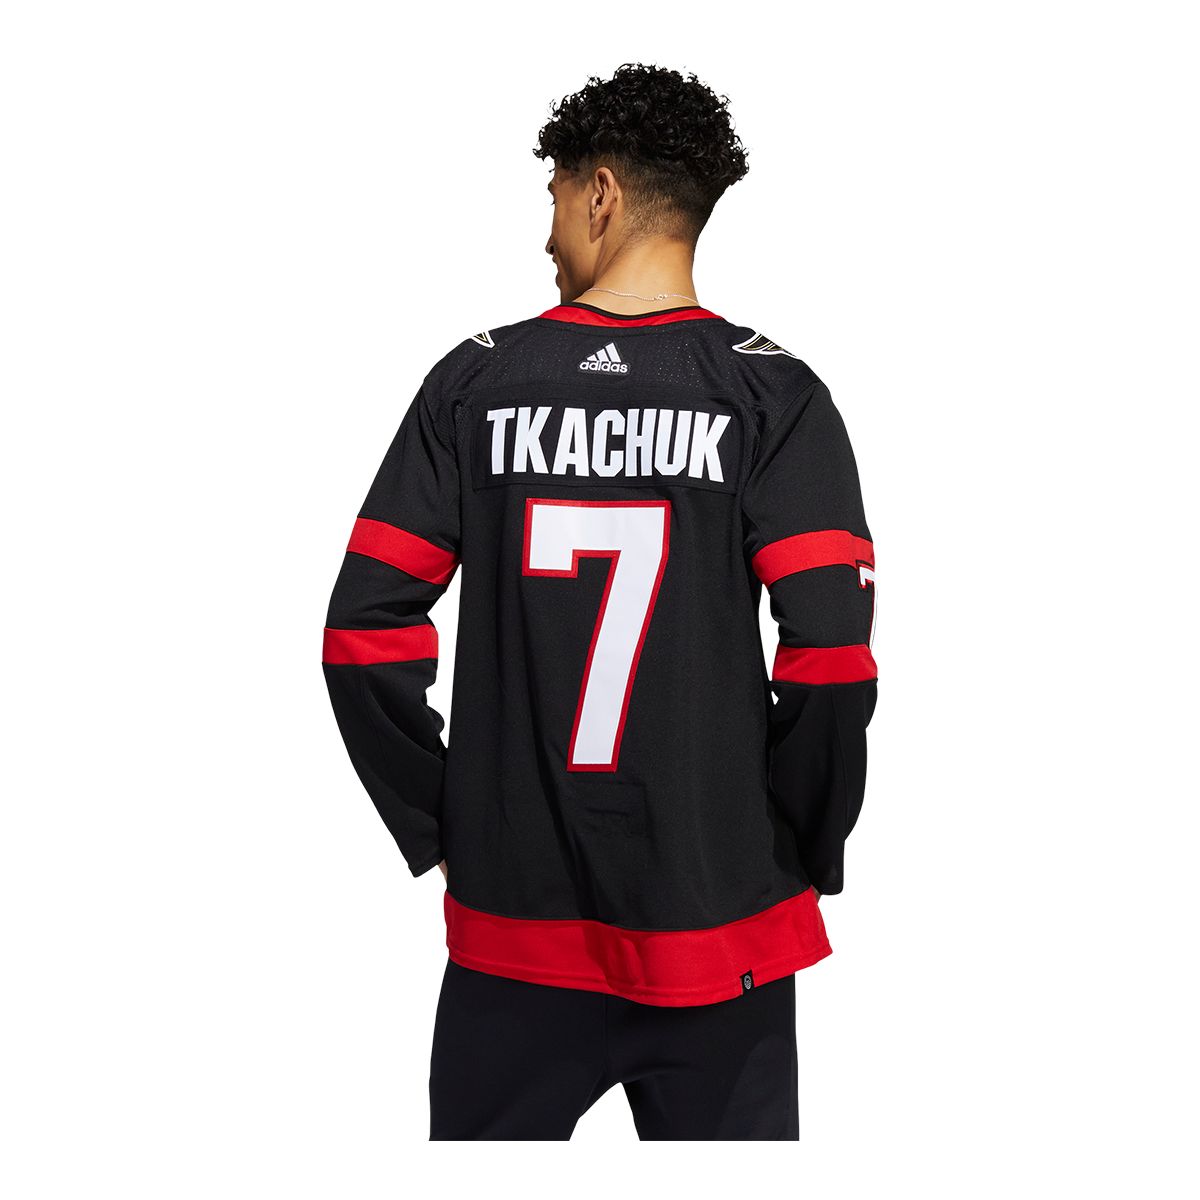 Fanatics Authentic Brady Tkachuk Black Ottawa Senators Autographed Adidas Authentic Jersey with 10th Sens Captain Inscription